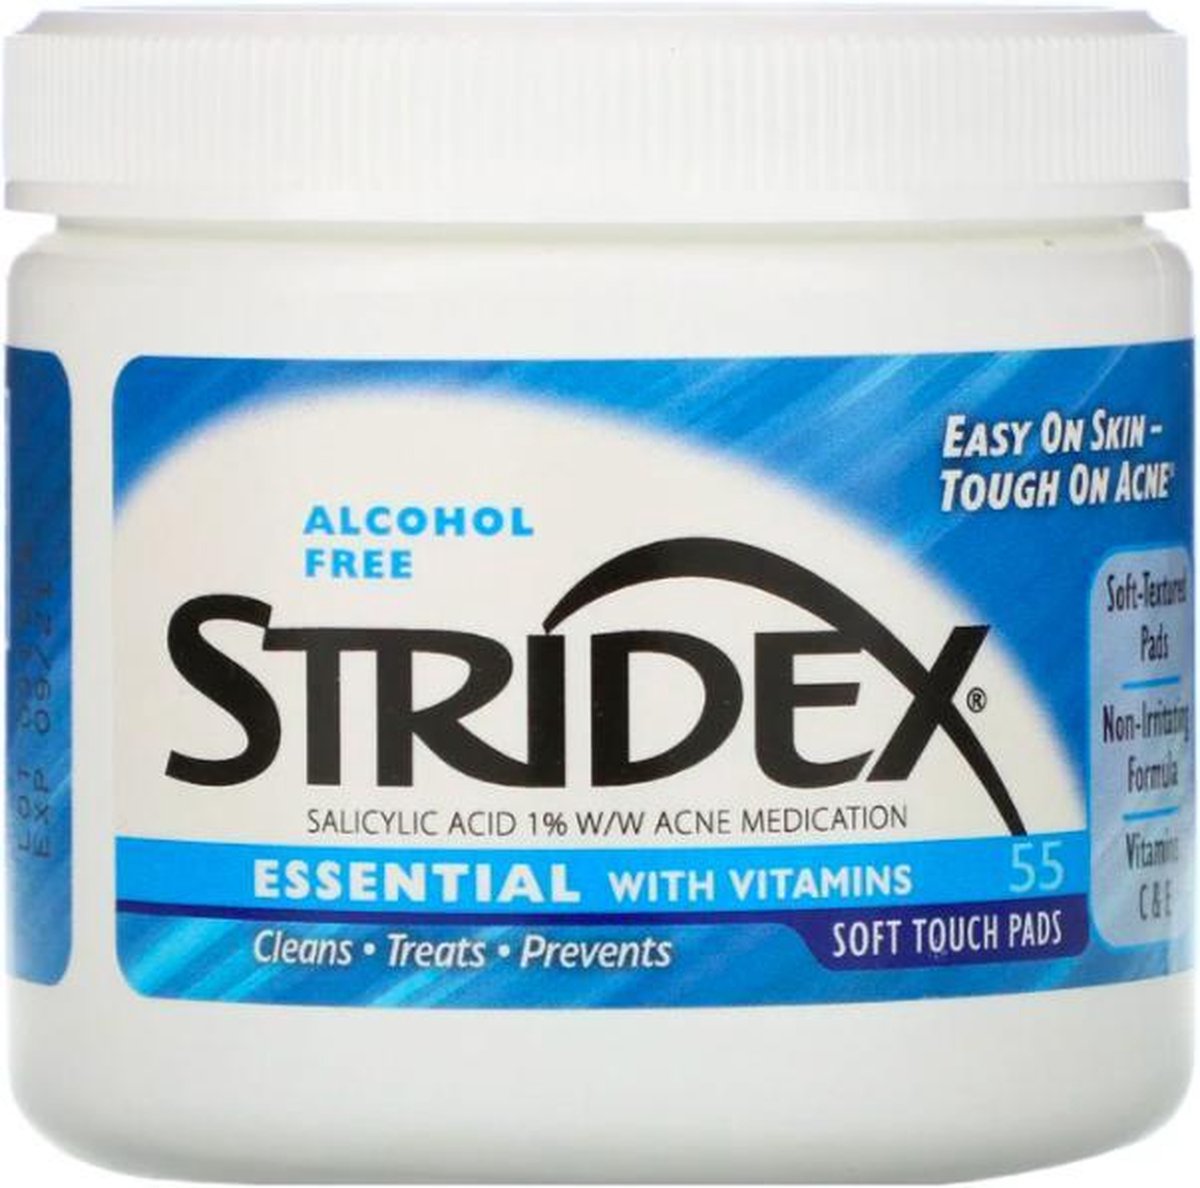 Stridex - Acnecontrole in één stap - Alcoholvrij - 55 Soft Touch-pads - Acne - Vitamine C - Gezonde huid - salicylic acid.